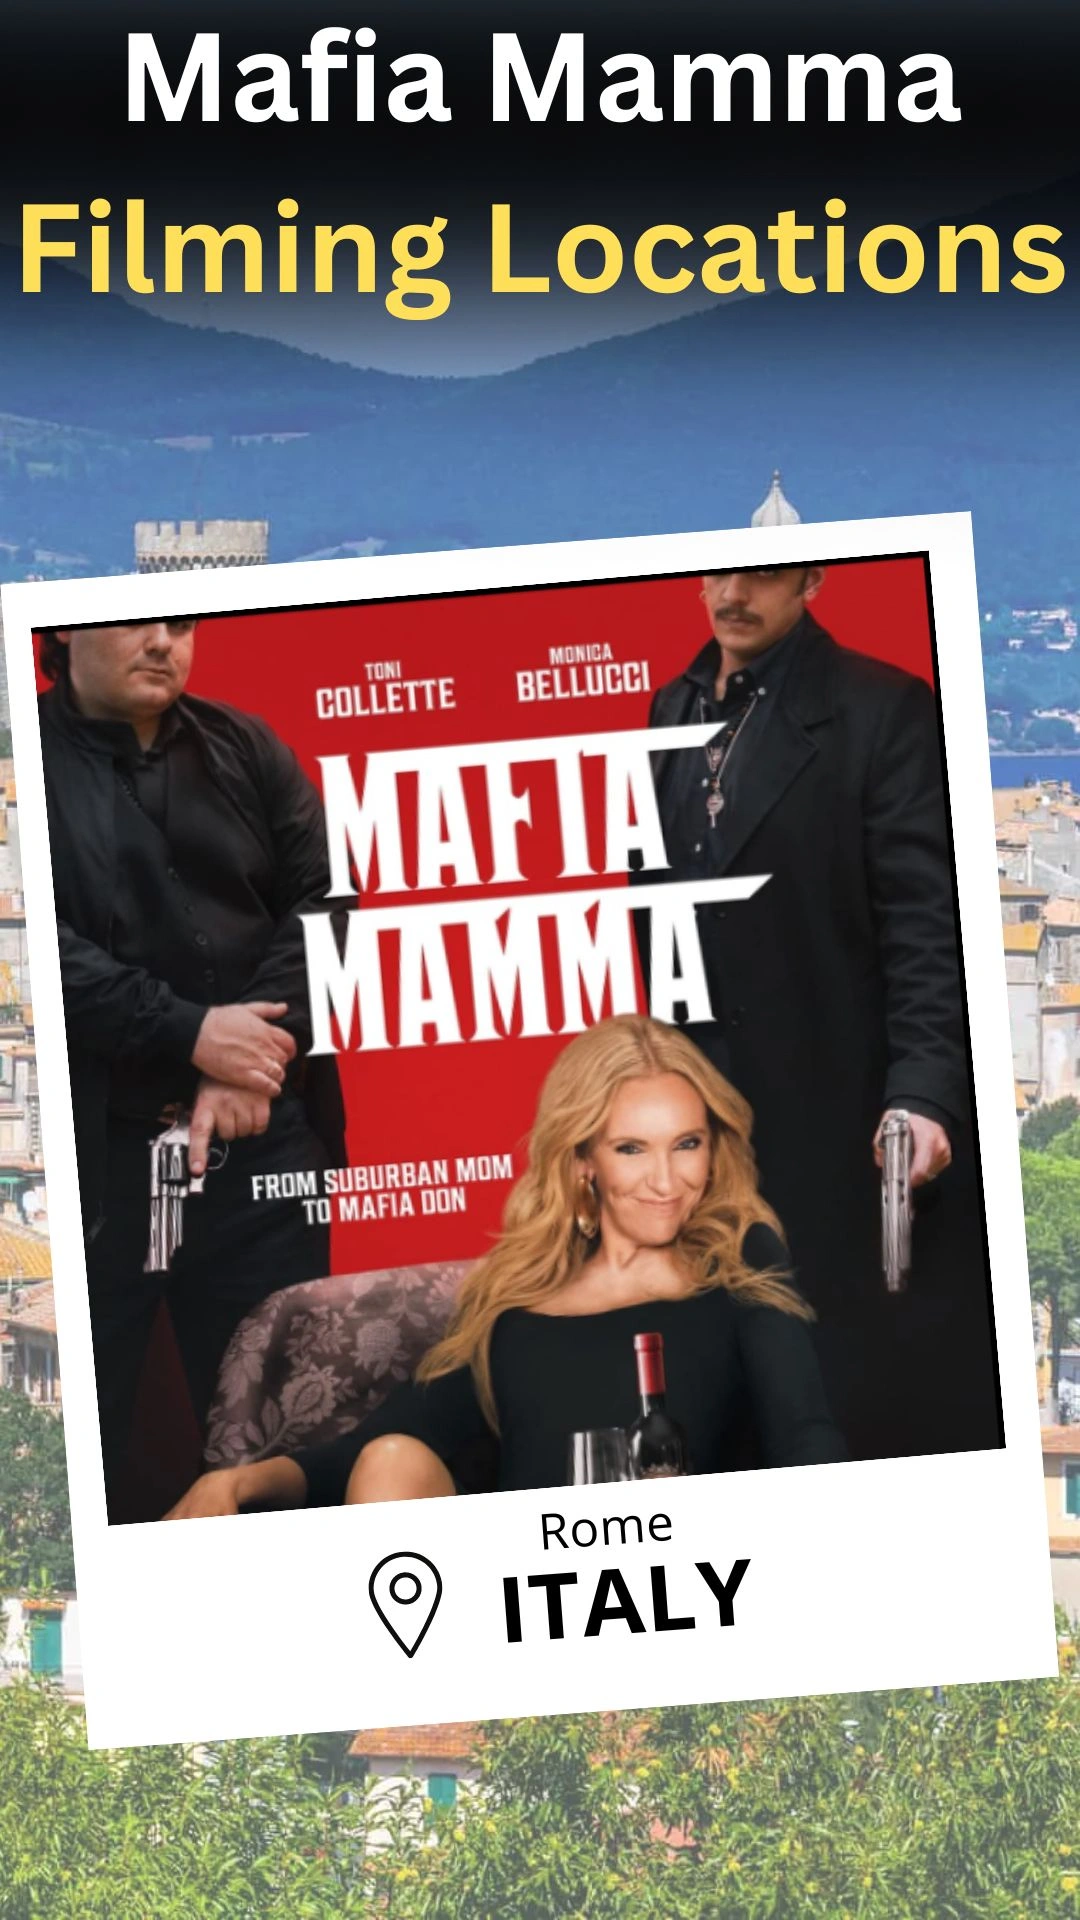 Mafia Mamma Filming Locations